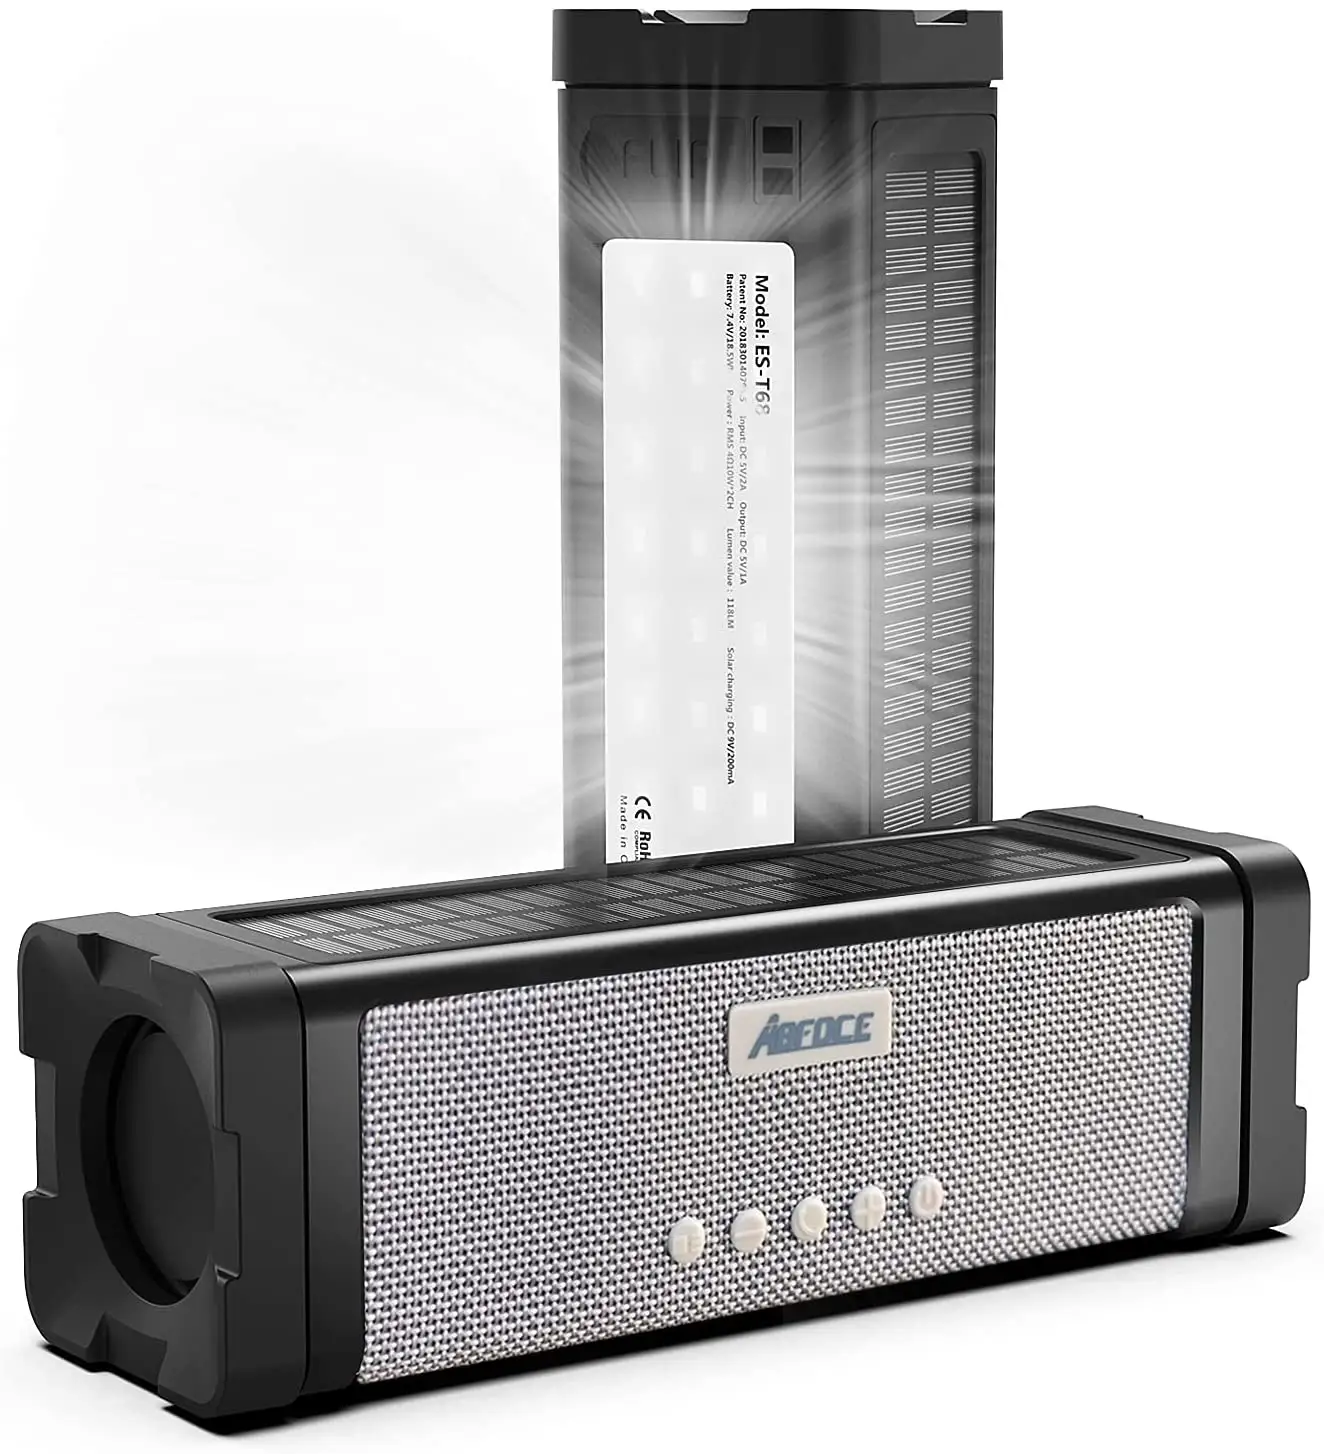 ES-T68 IPX7 waterproof soundcore bluetooh speaker true wireless multi-unit pairing solar bluetooh speaker and power bank